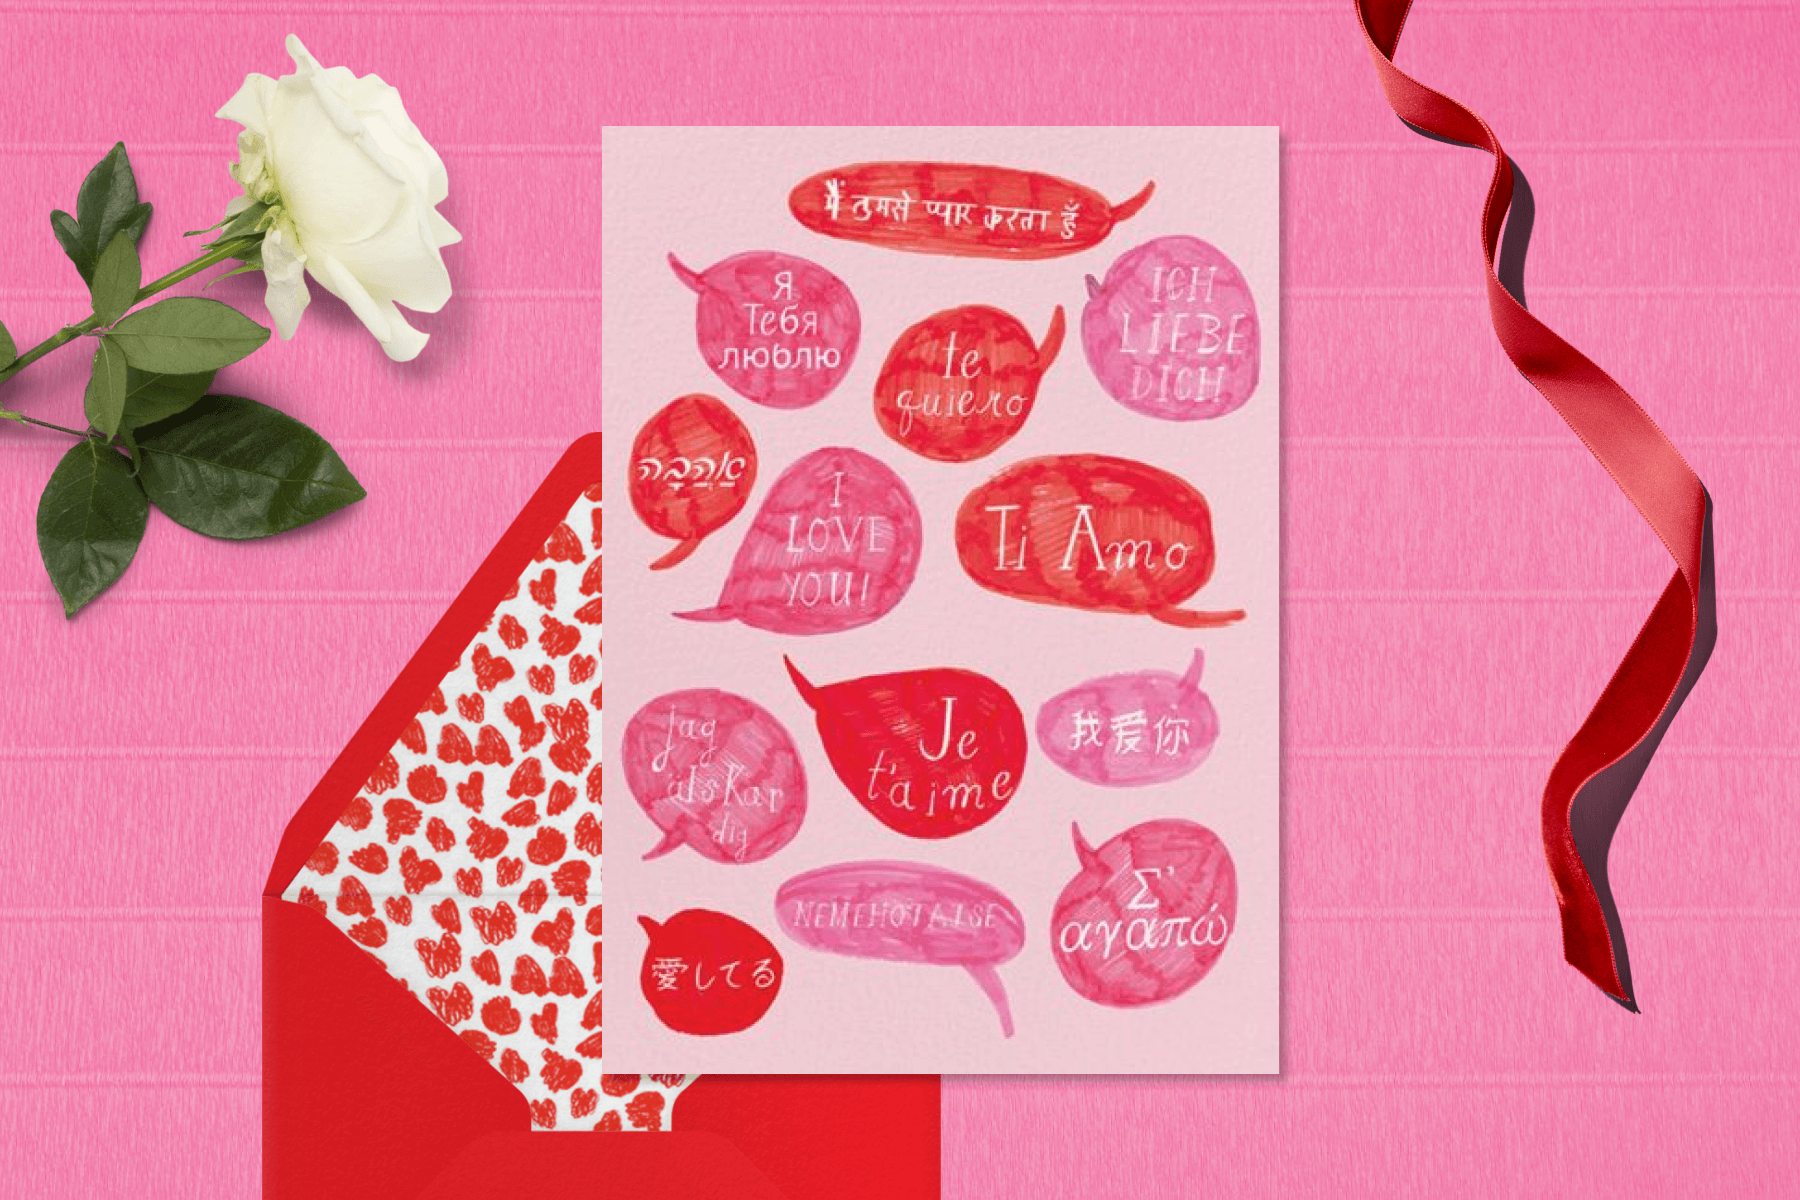 Happy Valentines Day Card For Her Him Girlfriend Husband Boyfriend Wife  LOVE